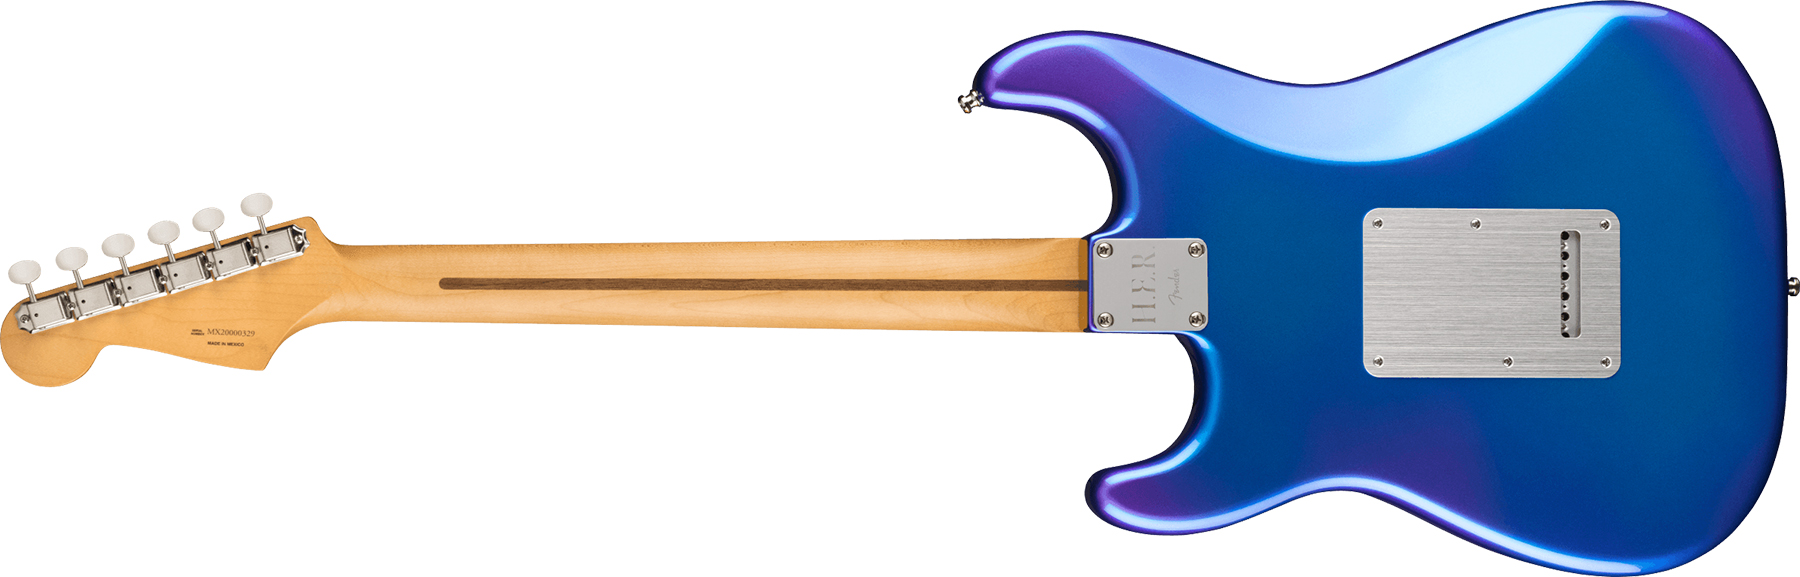 Fender H.e.r. Strat Ltd Signature Mex 3s Trem Mn - Blue Marlin - Guitare Électrique Forme Str - Variation 1